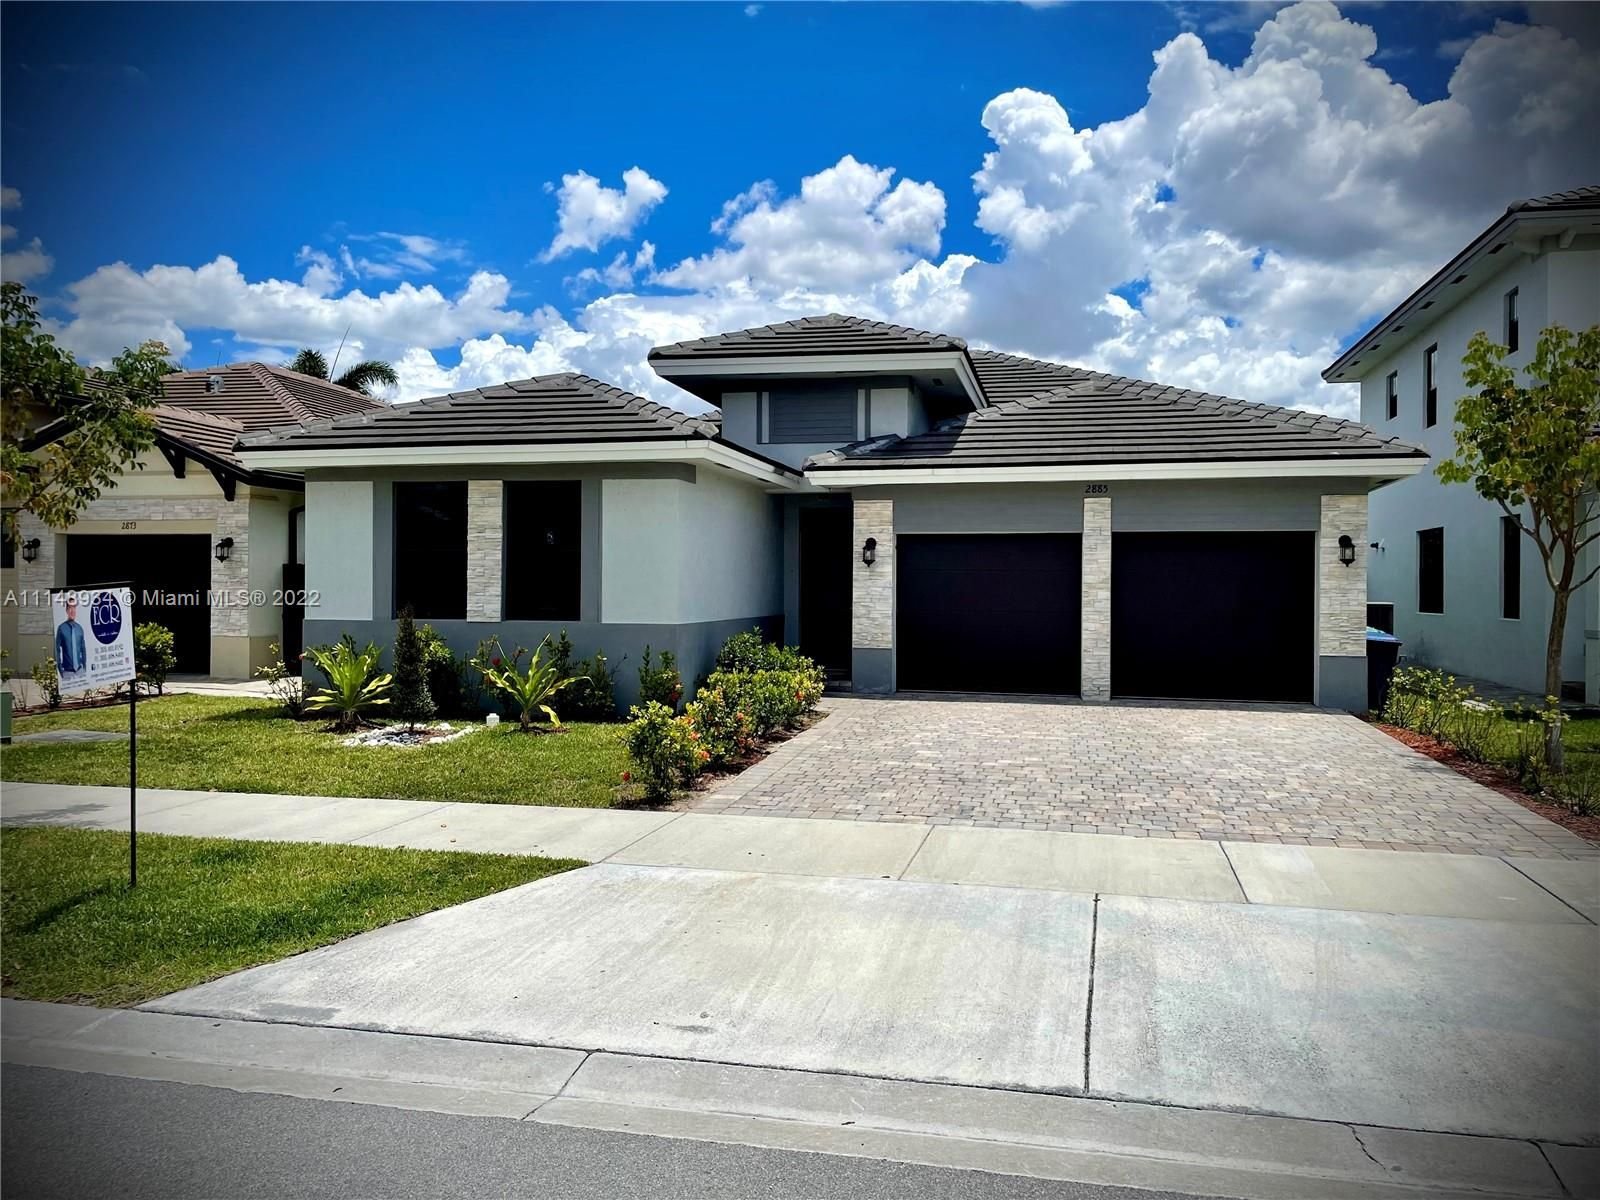 Real estate property located at 2885 150th Ct, Miami-Dade County, Miami, FL